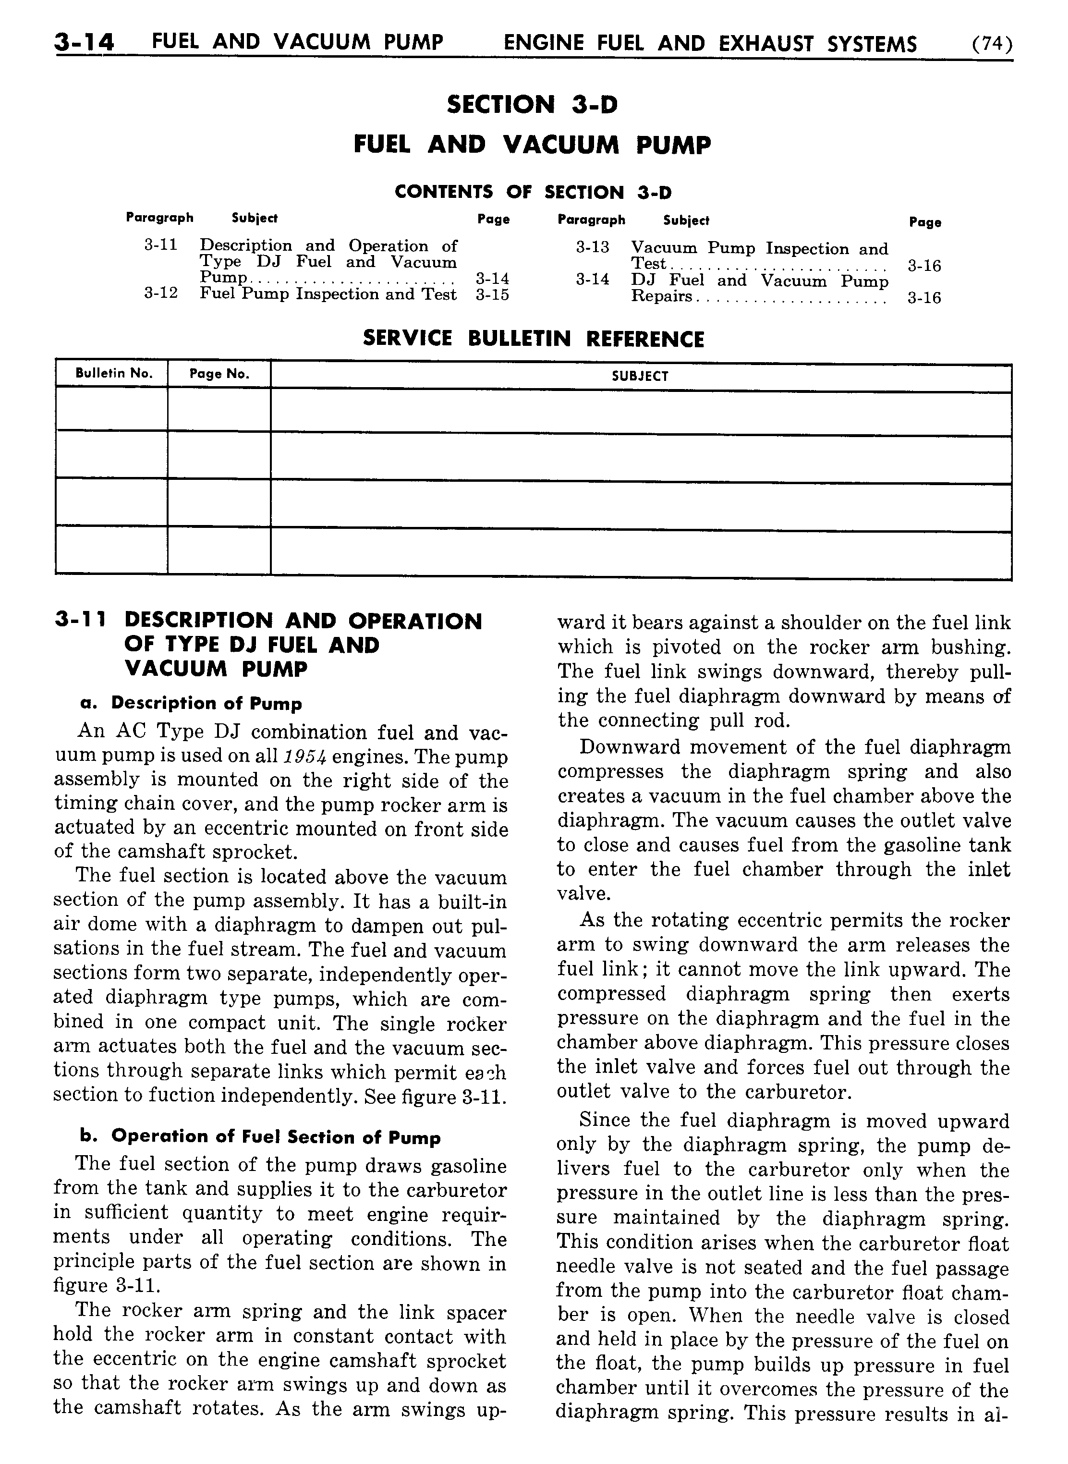 n_04 1954 Buick Shop Manual - Engine Fuel & Exhaust-014-014.jpg